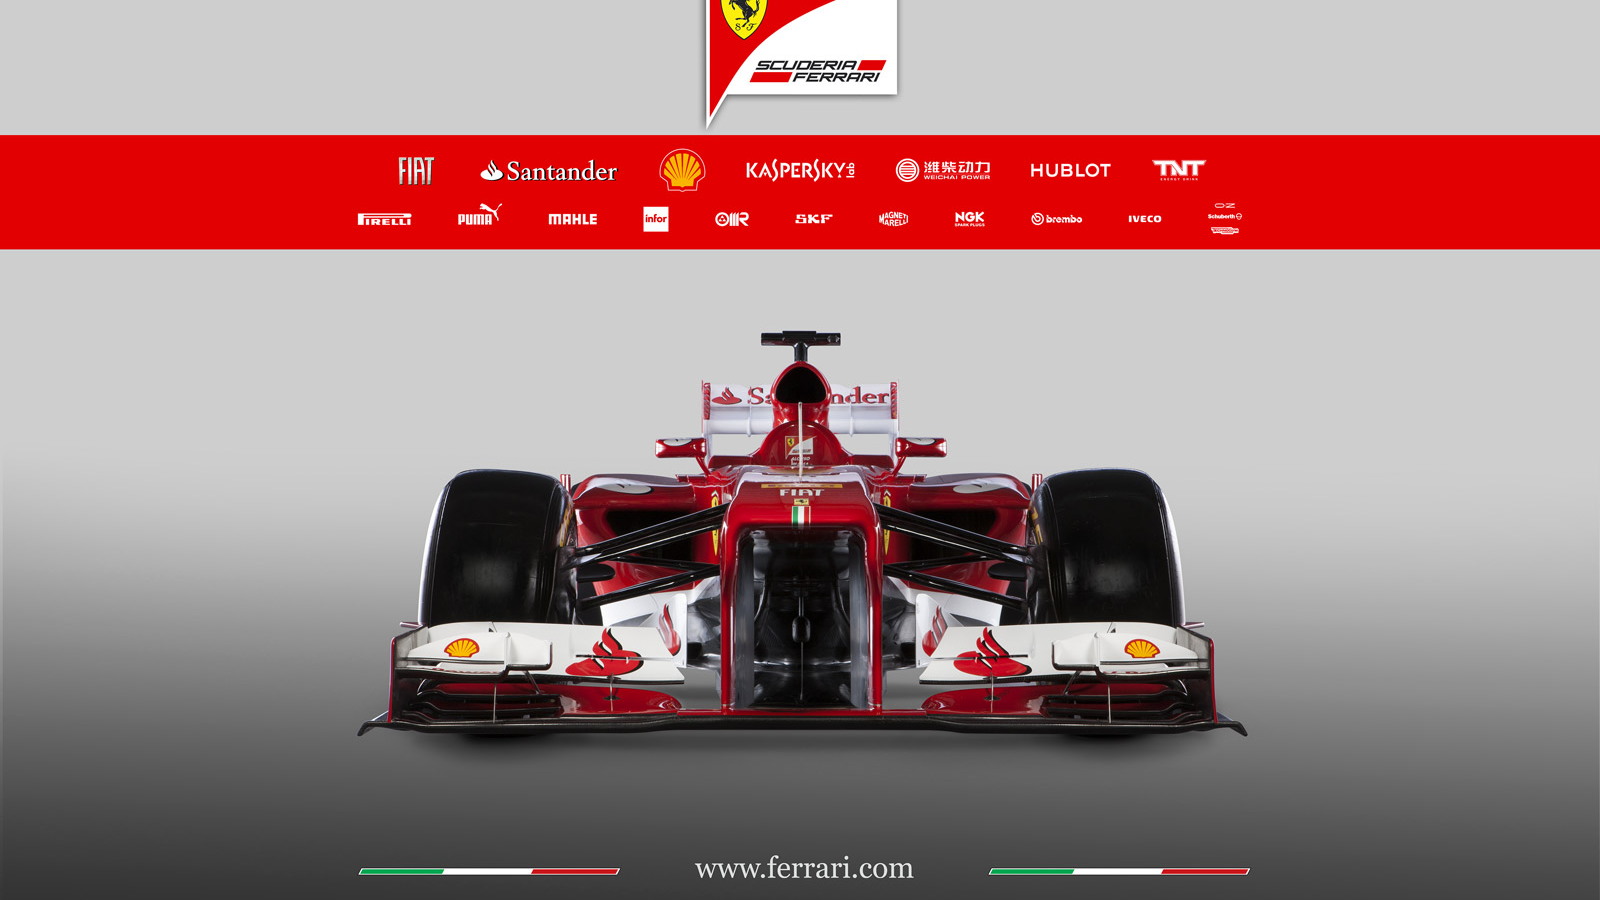 Ferrari's 2013 Formula One car, the F138